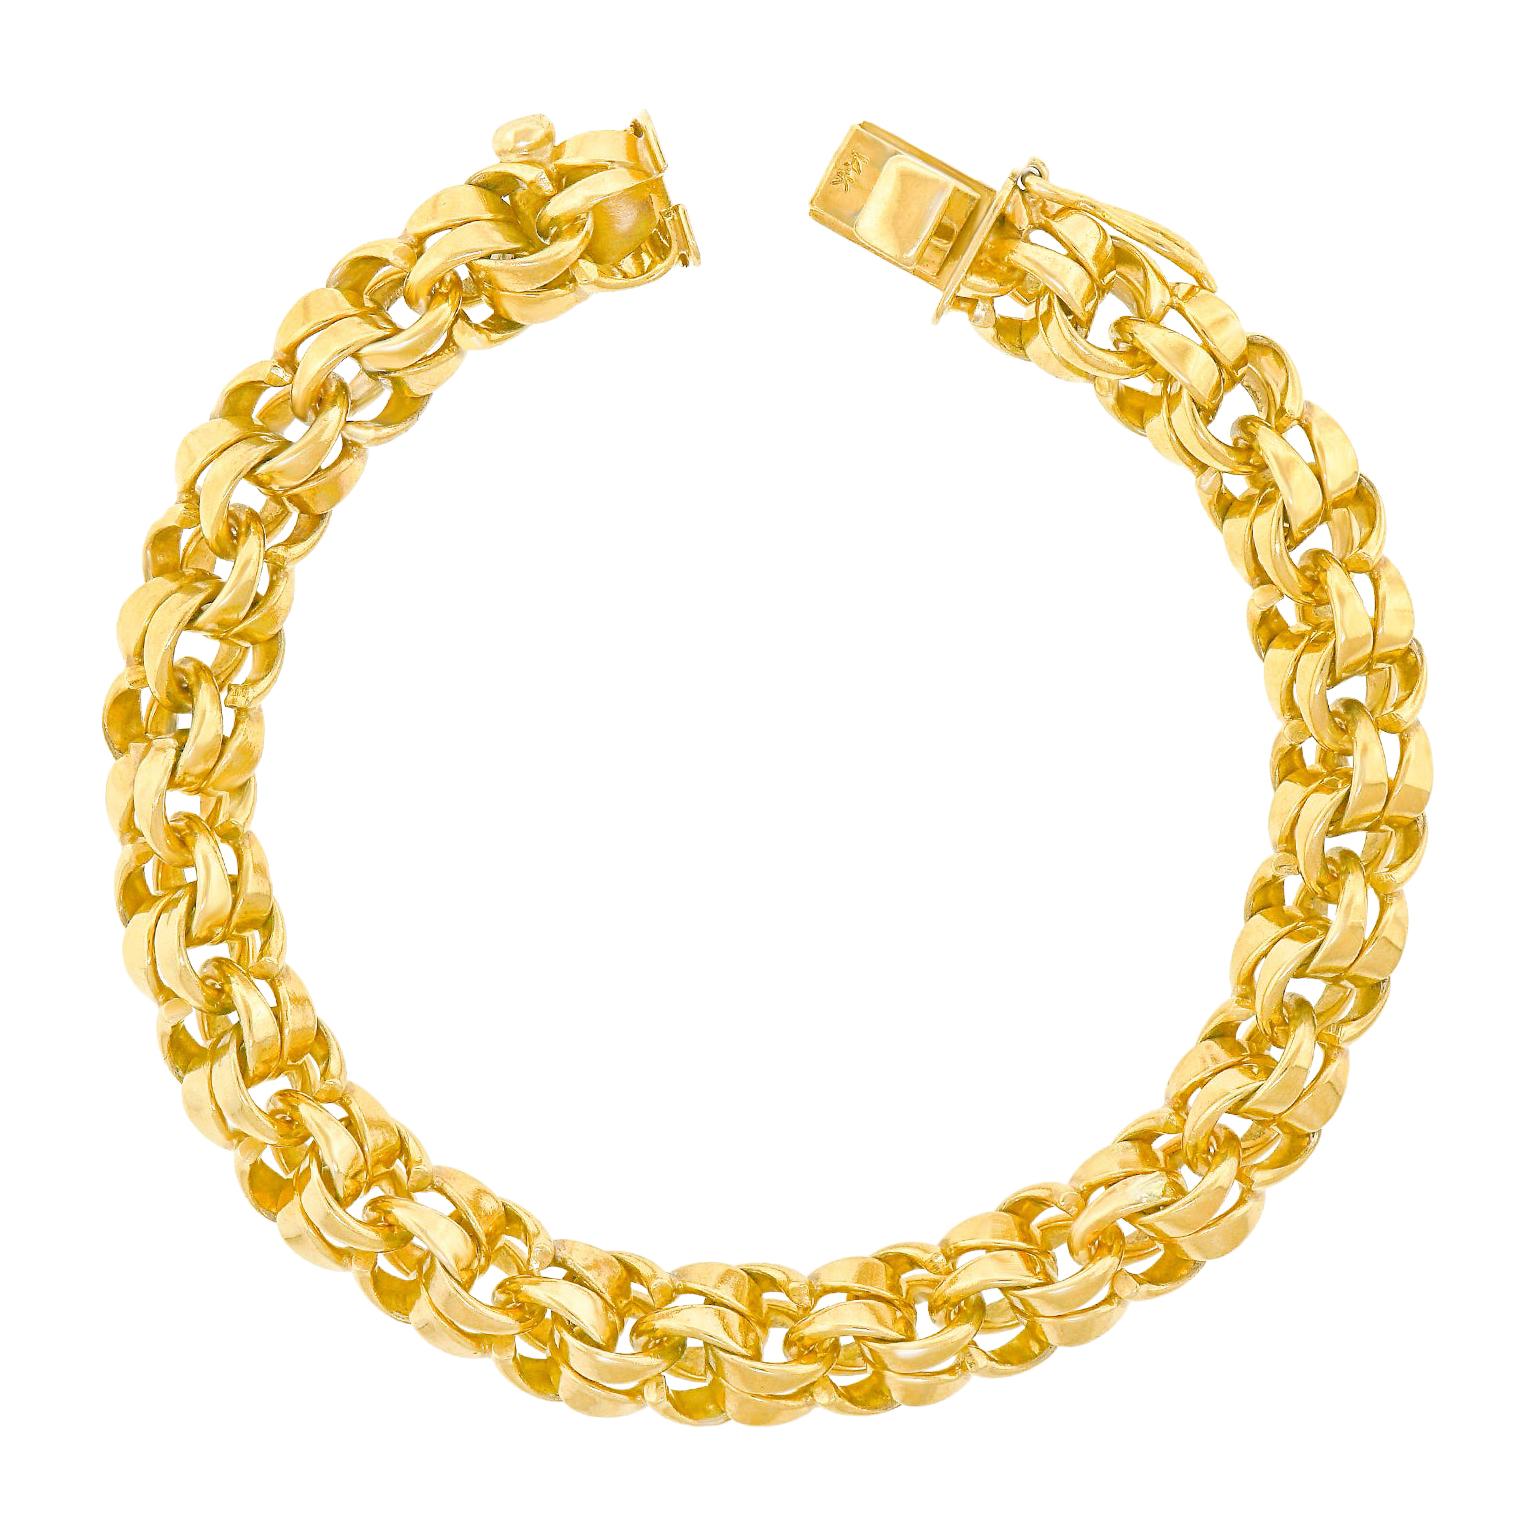 Fifties Everyday American Gold Bracelet